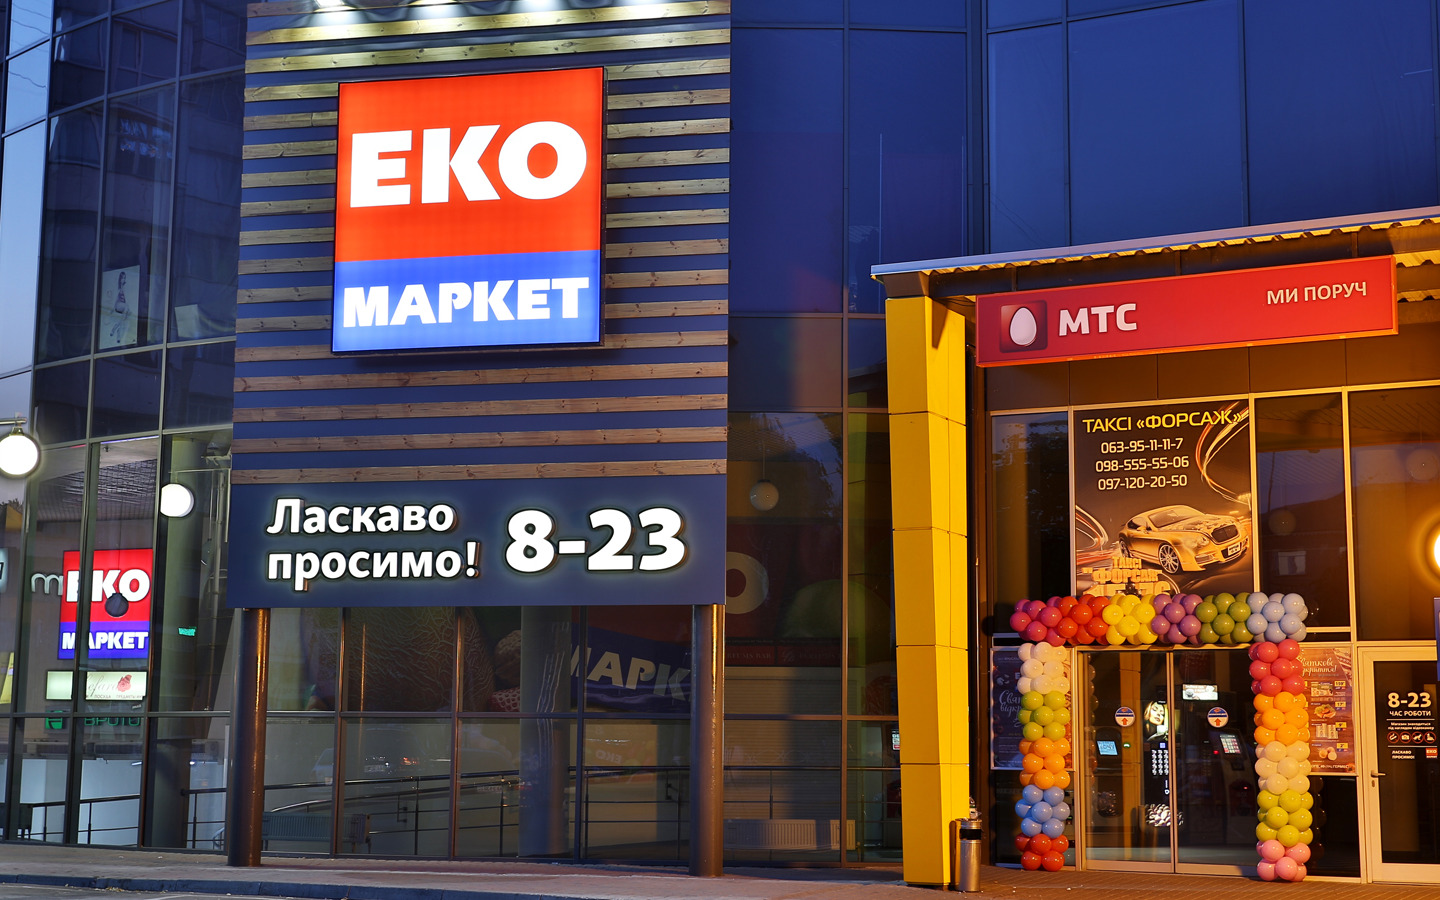 ЕКО-Маркет — вакансия в Касир (Бориспіль)